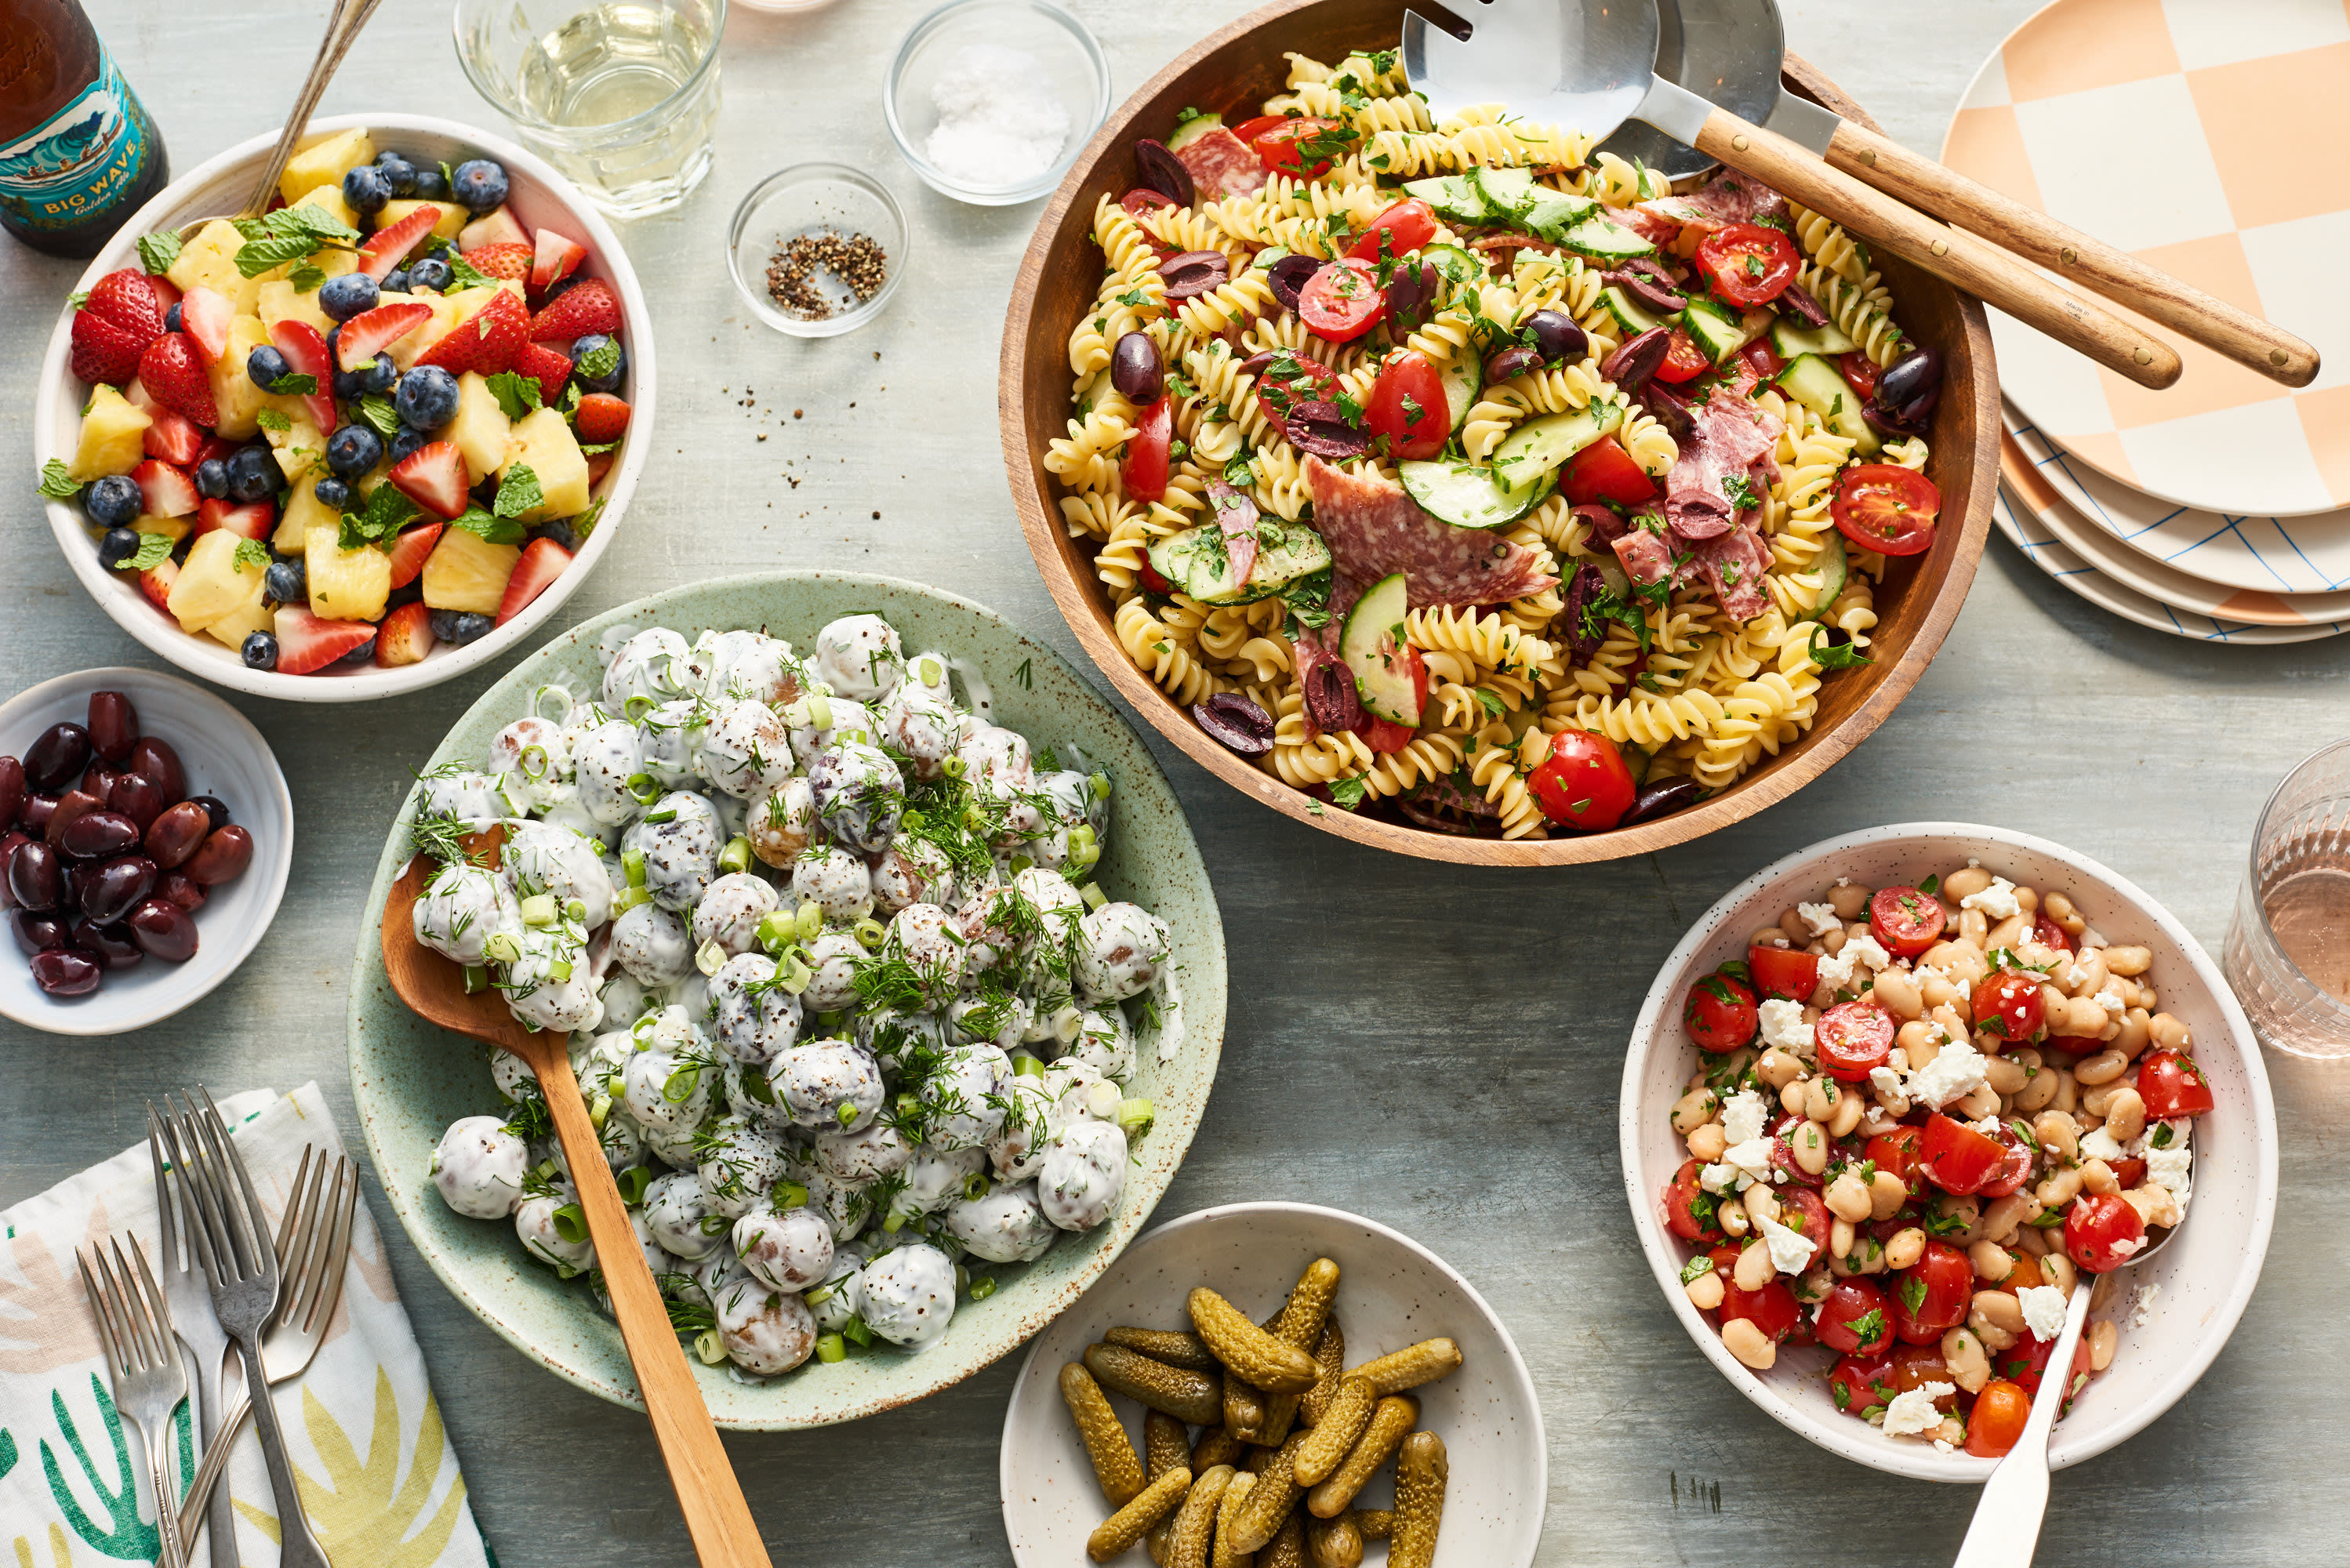 https://cdn.apartmenttherapy.info/image/upload/v1557521112/k/Photo/Series/2019-05-megalist-potluck-salads/Megalist_Pasta-Salad.jpg